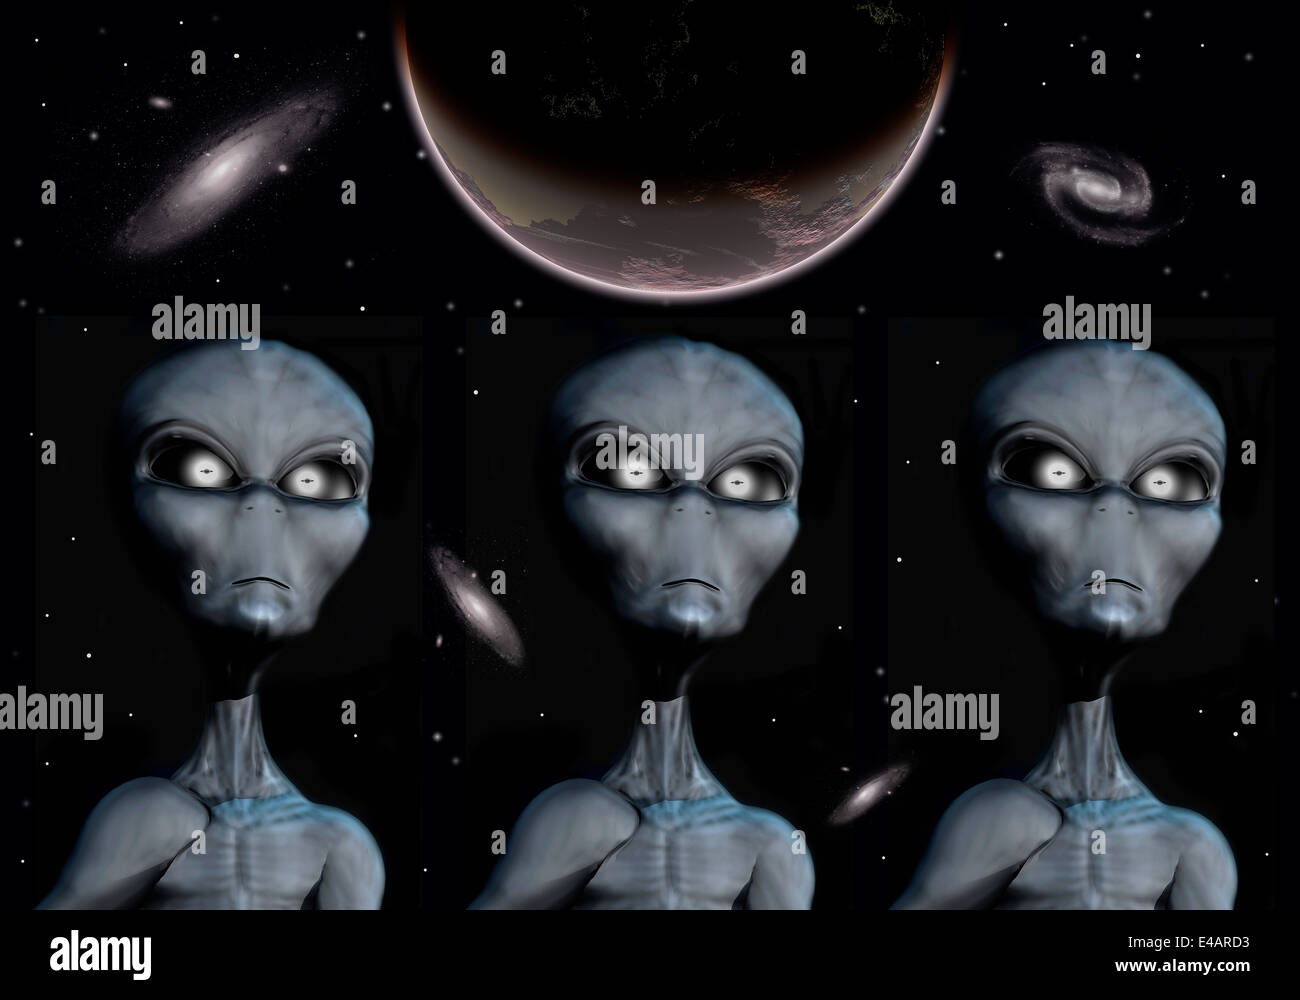 Alien Clones Stock Photo